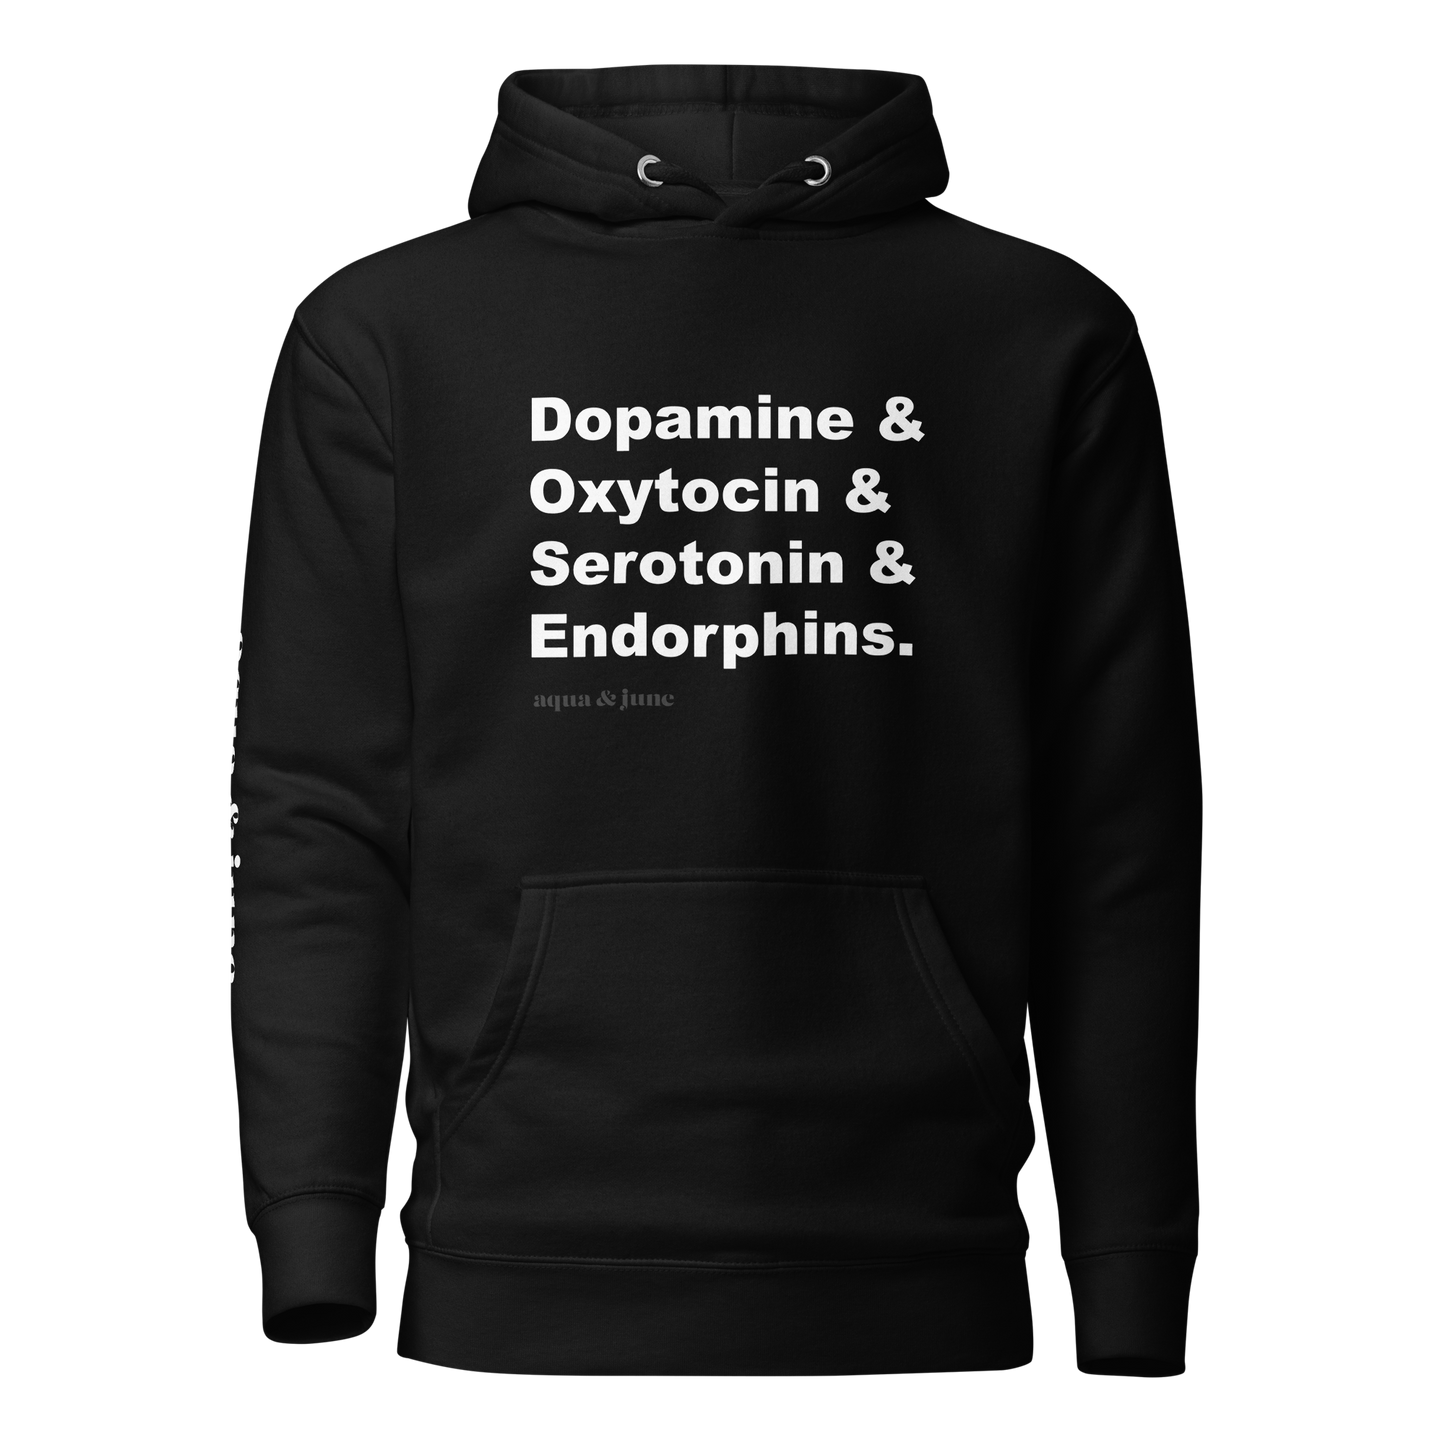 Dopamine & Oxytocin & Serotonin & Endorphins [ hoodie ]